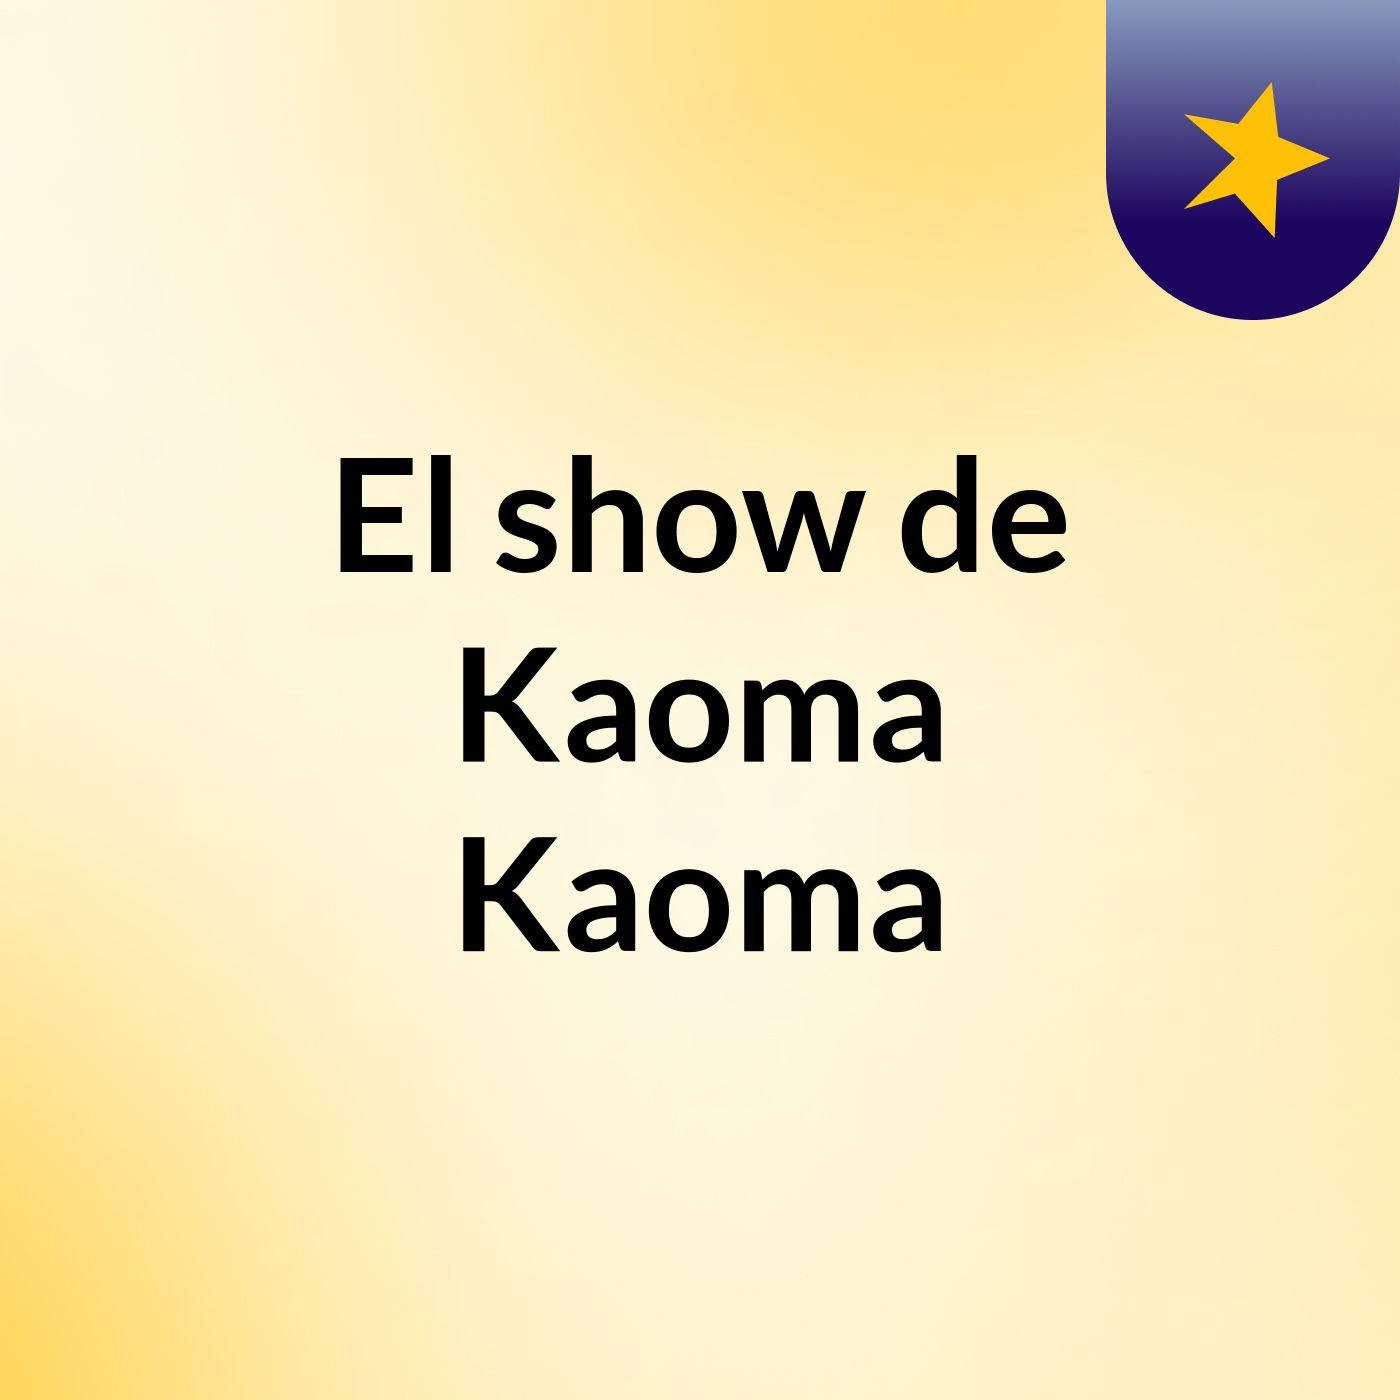 El show de Kaoma Kaoma